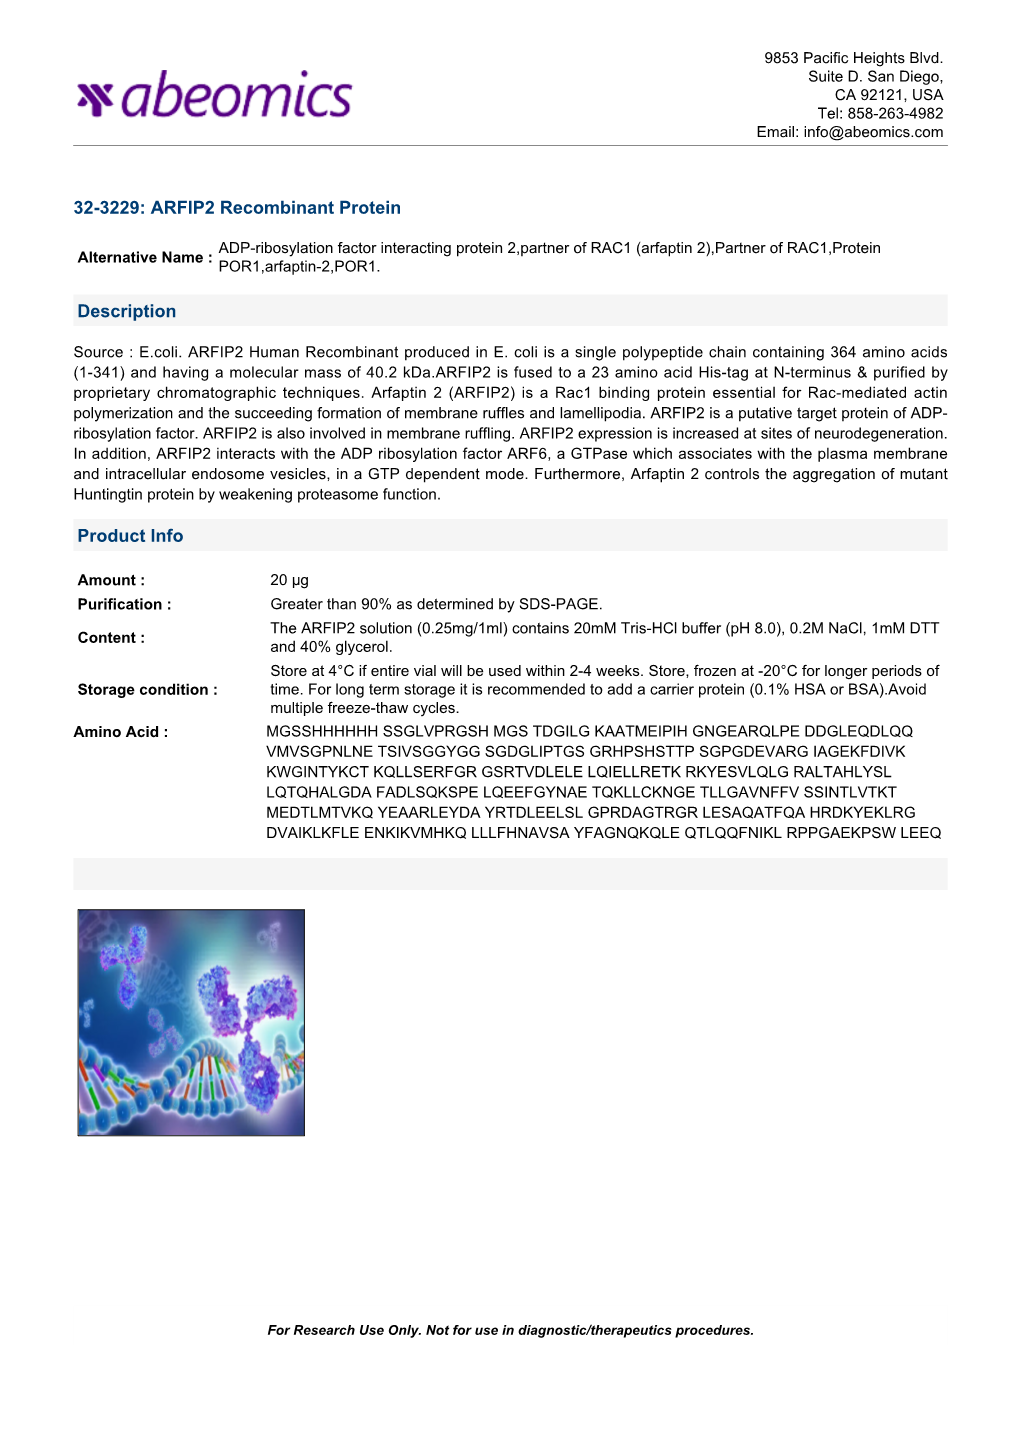 32-3229: ARFIP2 Recombinant Protein Description Product Info